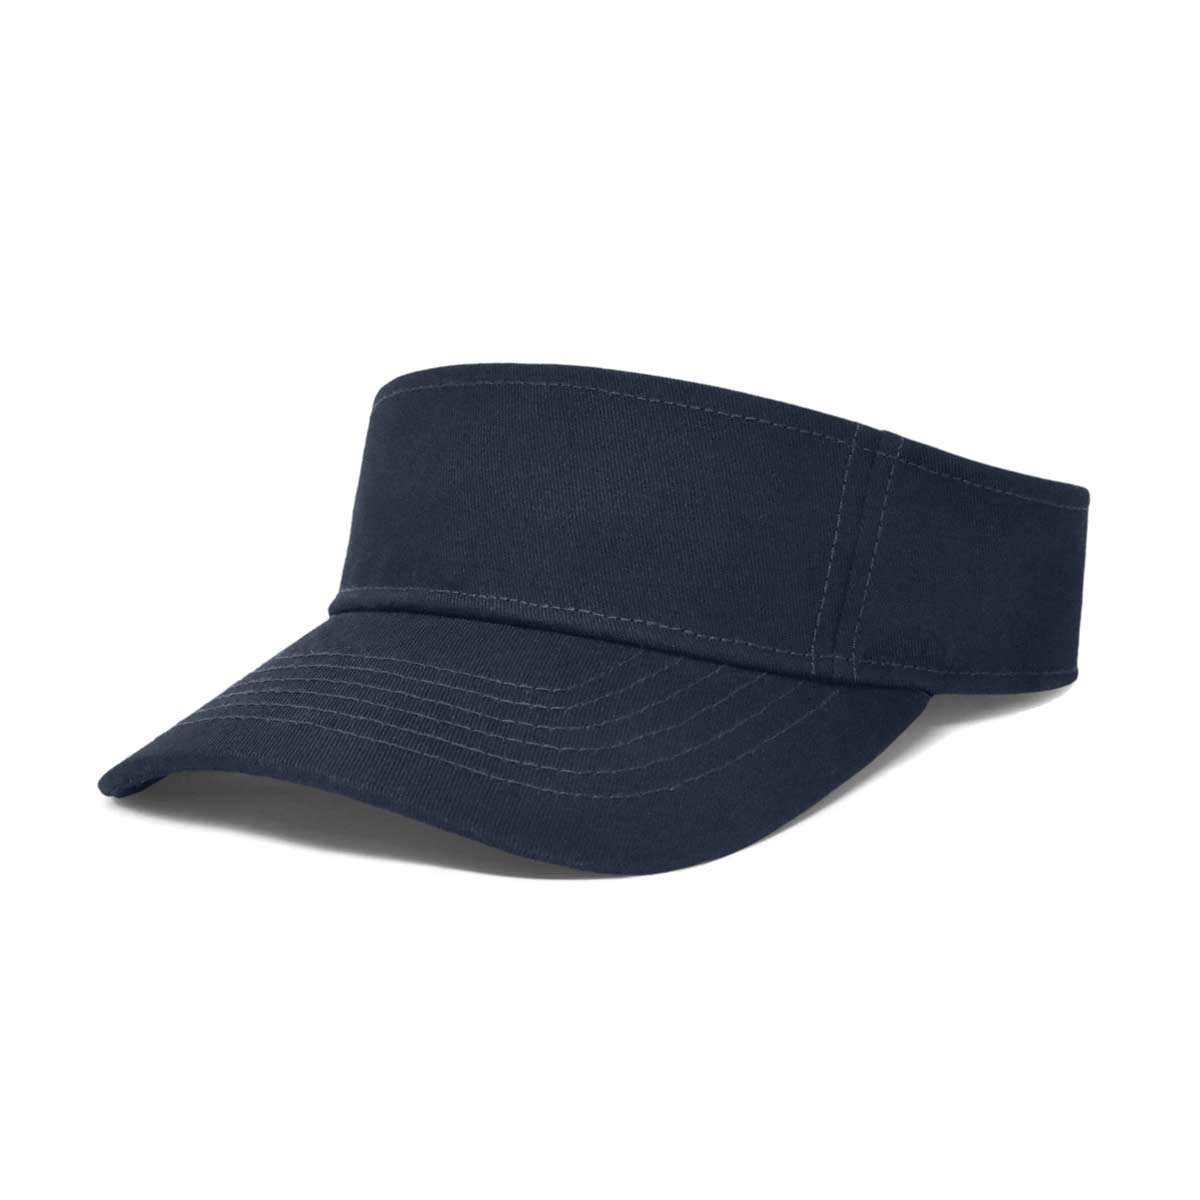 Dalix Visor Hat Adjustable Cotton Men Women Classic in Black